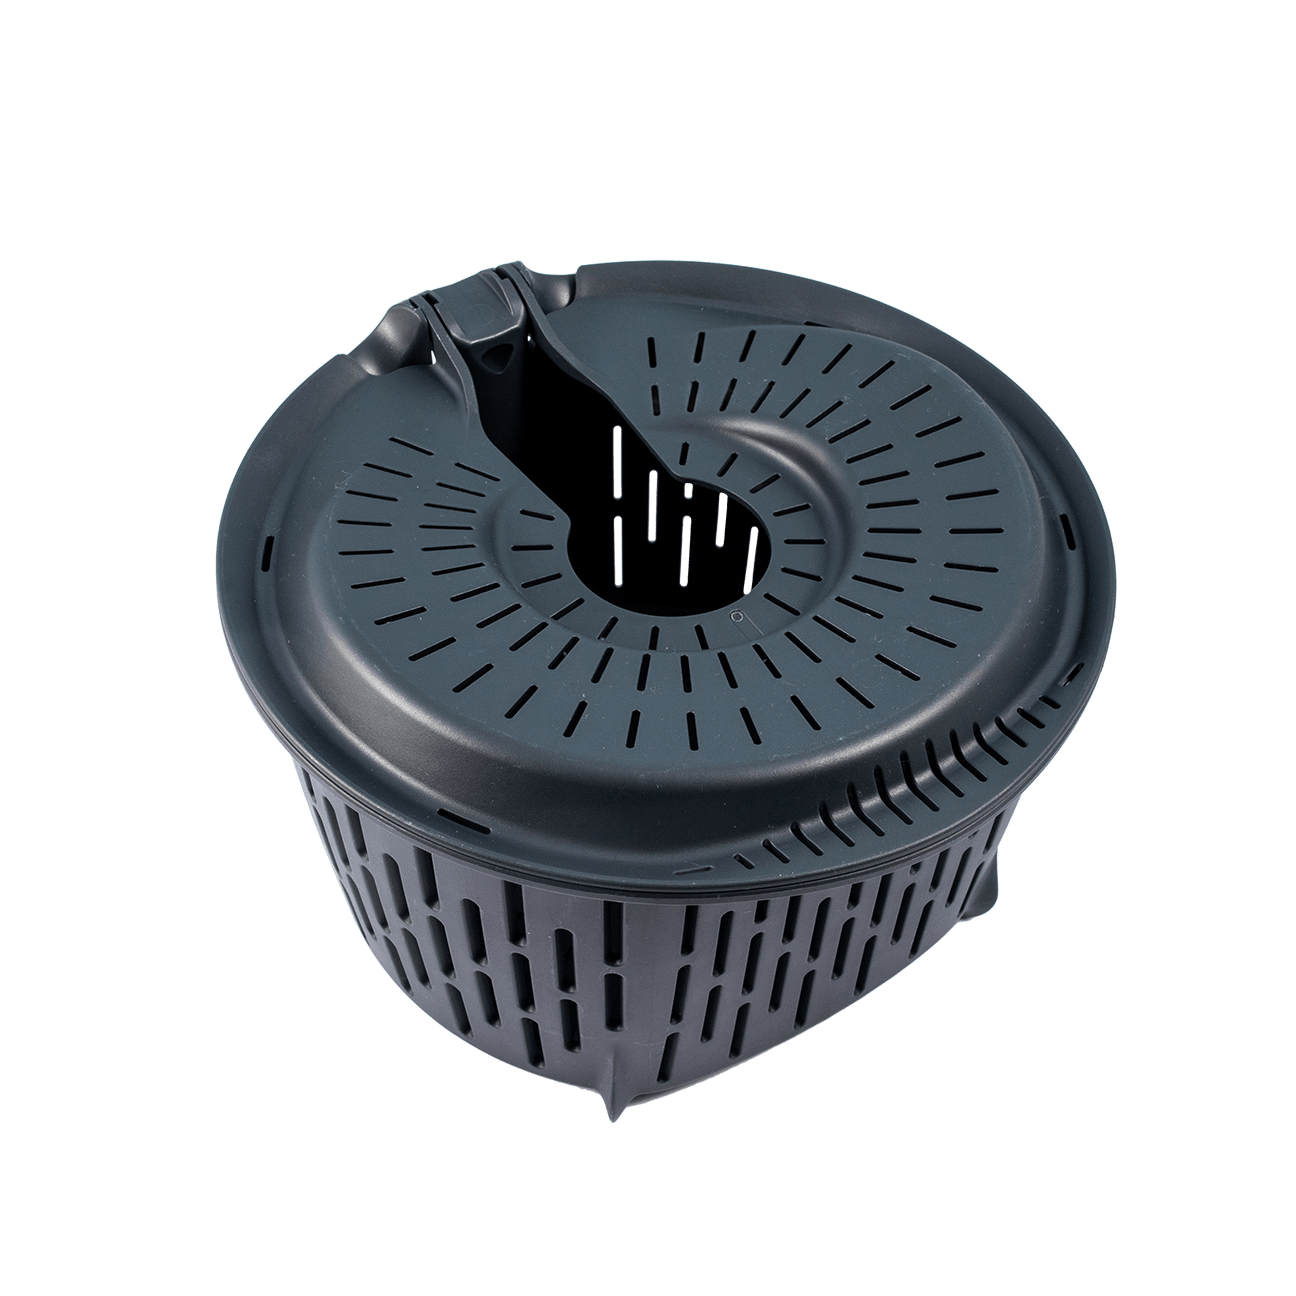 Thermomix-New-Zealand Vorwerk TM6 Simmering Basket With Lid Parts